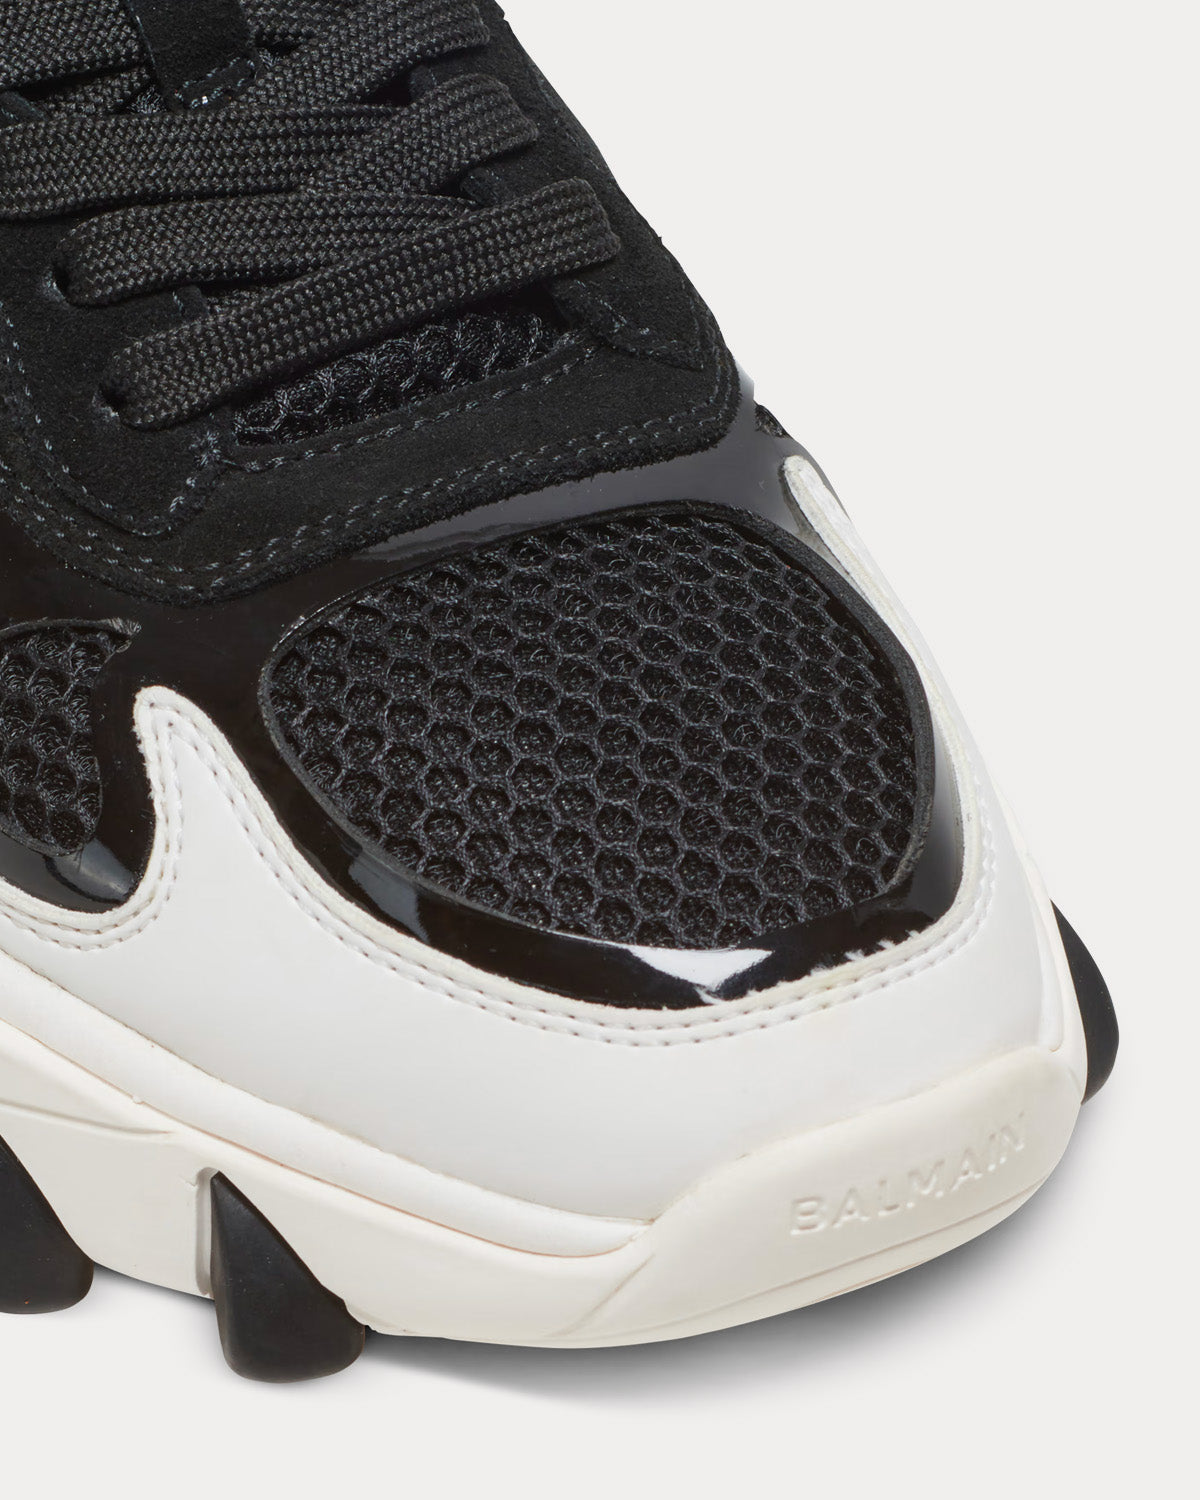 Balmain - B-East Leather, Suede & Mesh Black / White Low Top Sneakers